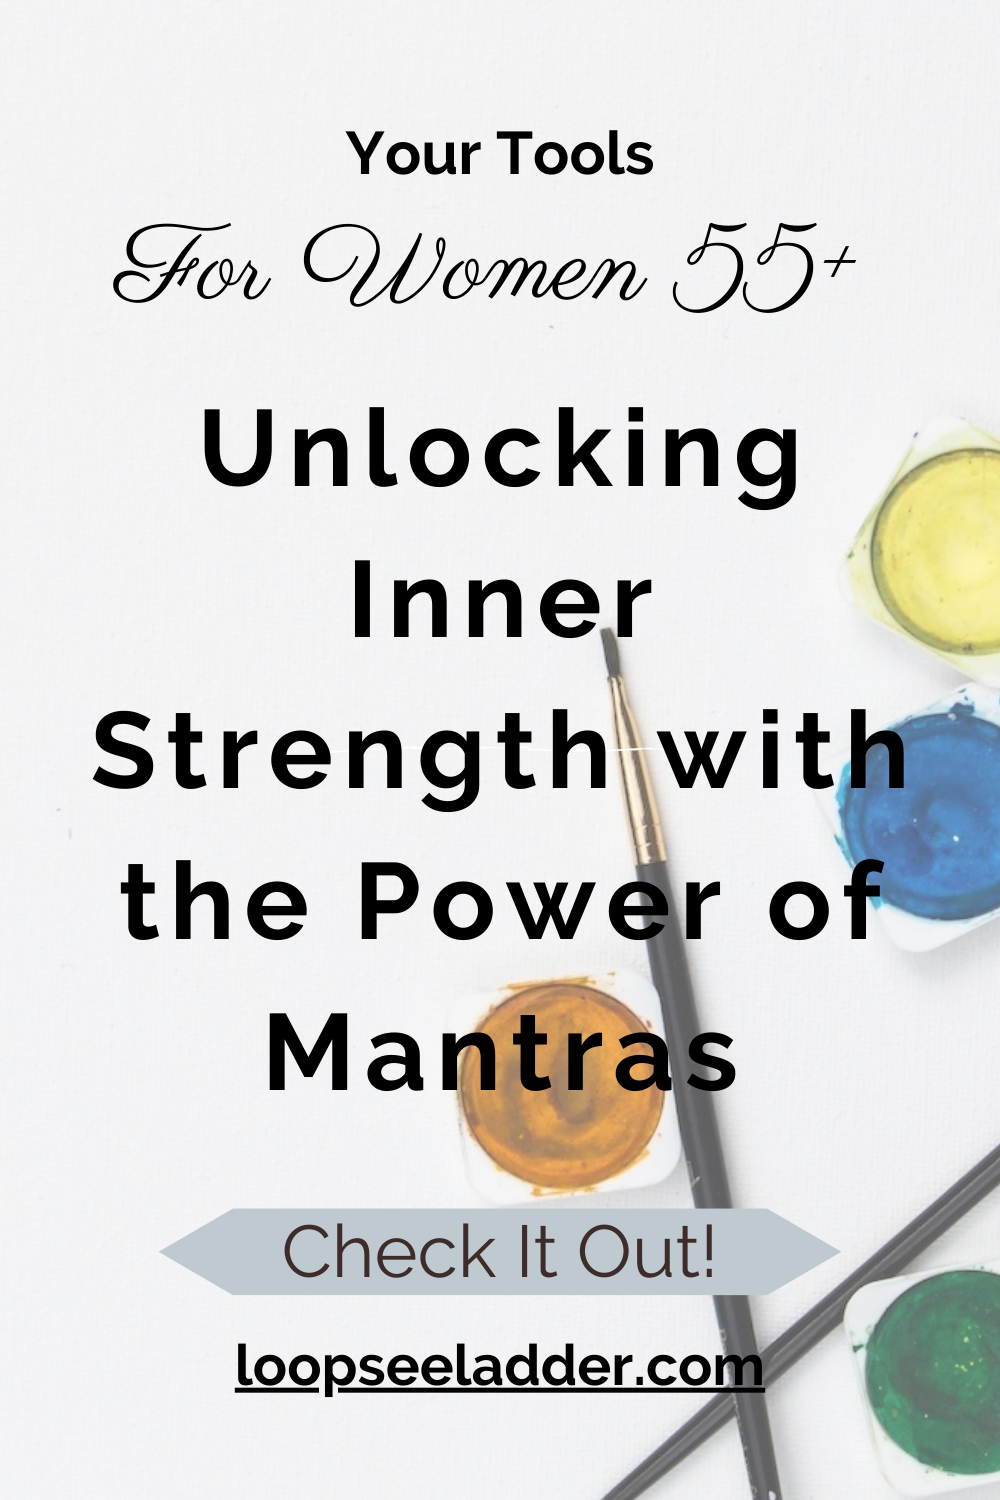 Unlocking Inner Strength: Harnessing the Power of Mantras for Women 55+